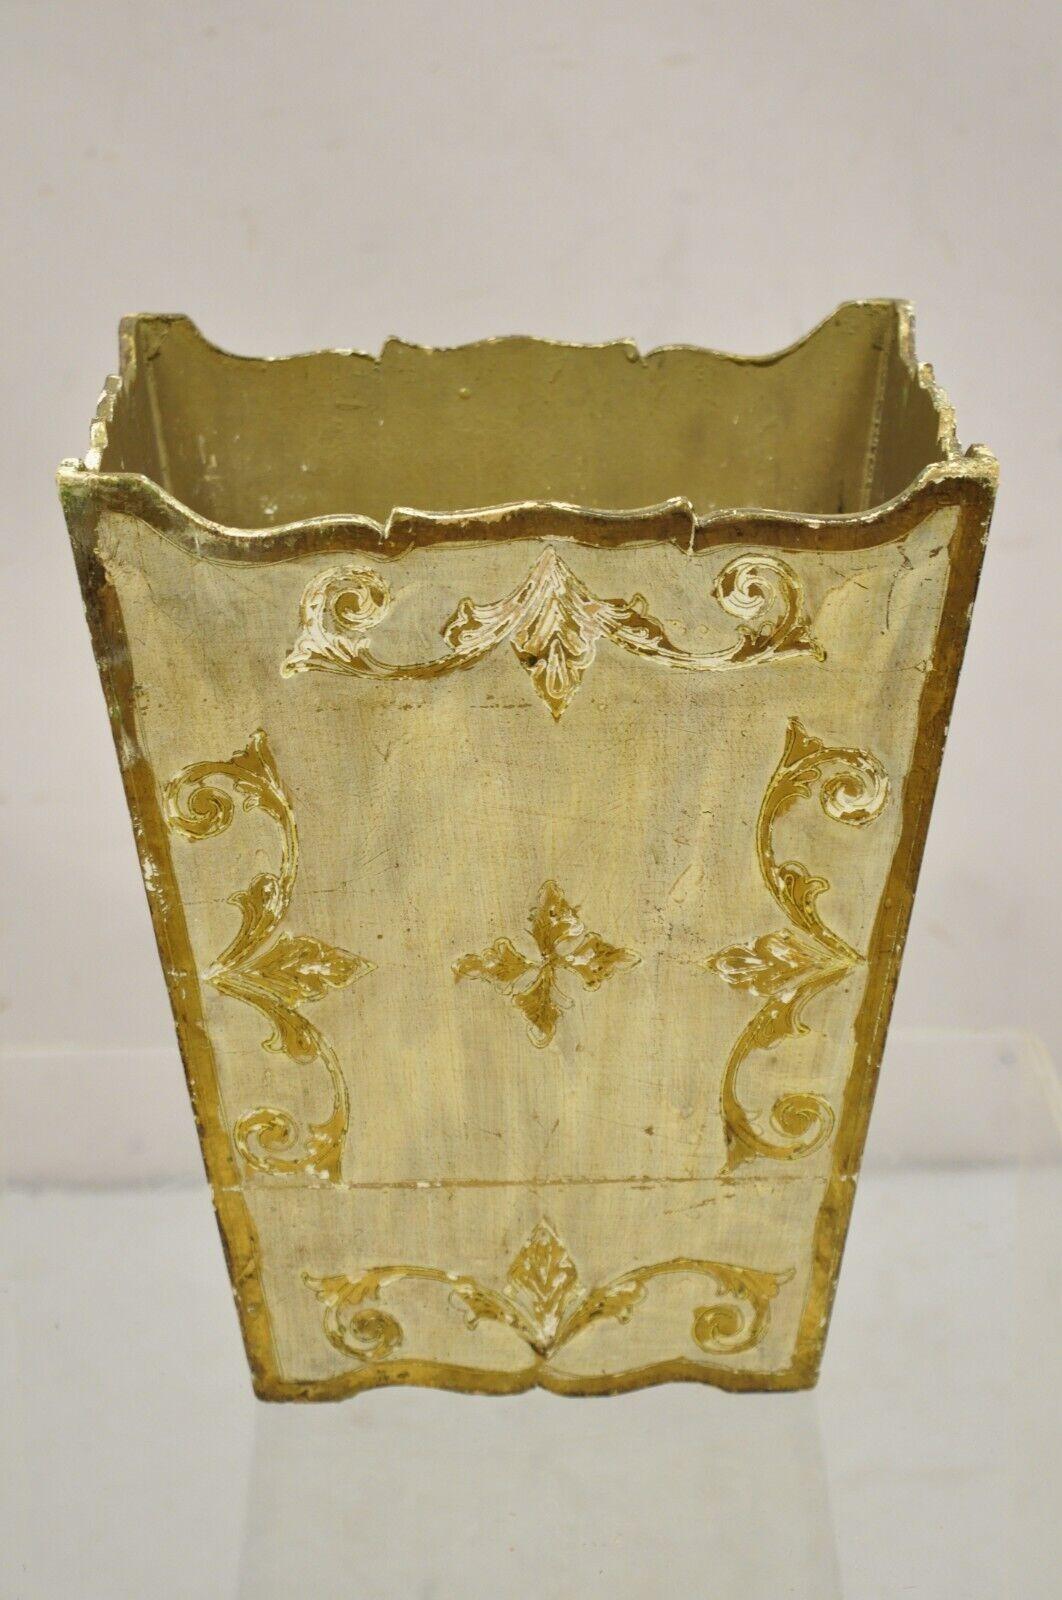 Vintage Italian Florentine Wooden Gold Gilt Wastebasket Trash Can. Circa Mid 20th Century. Measurements: 12